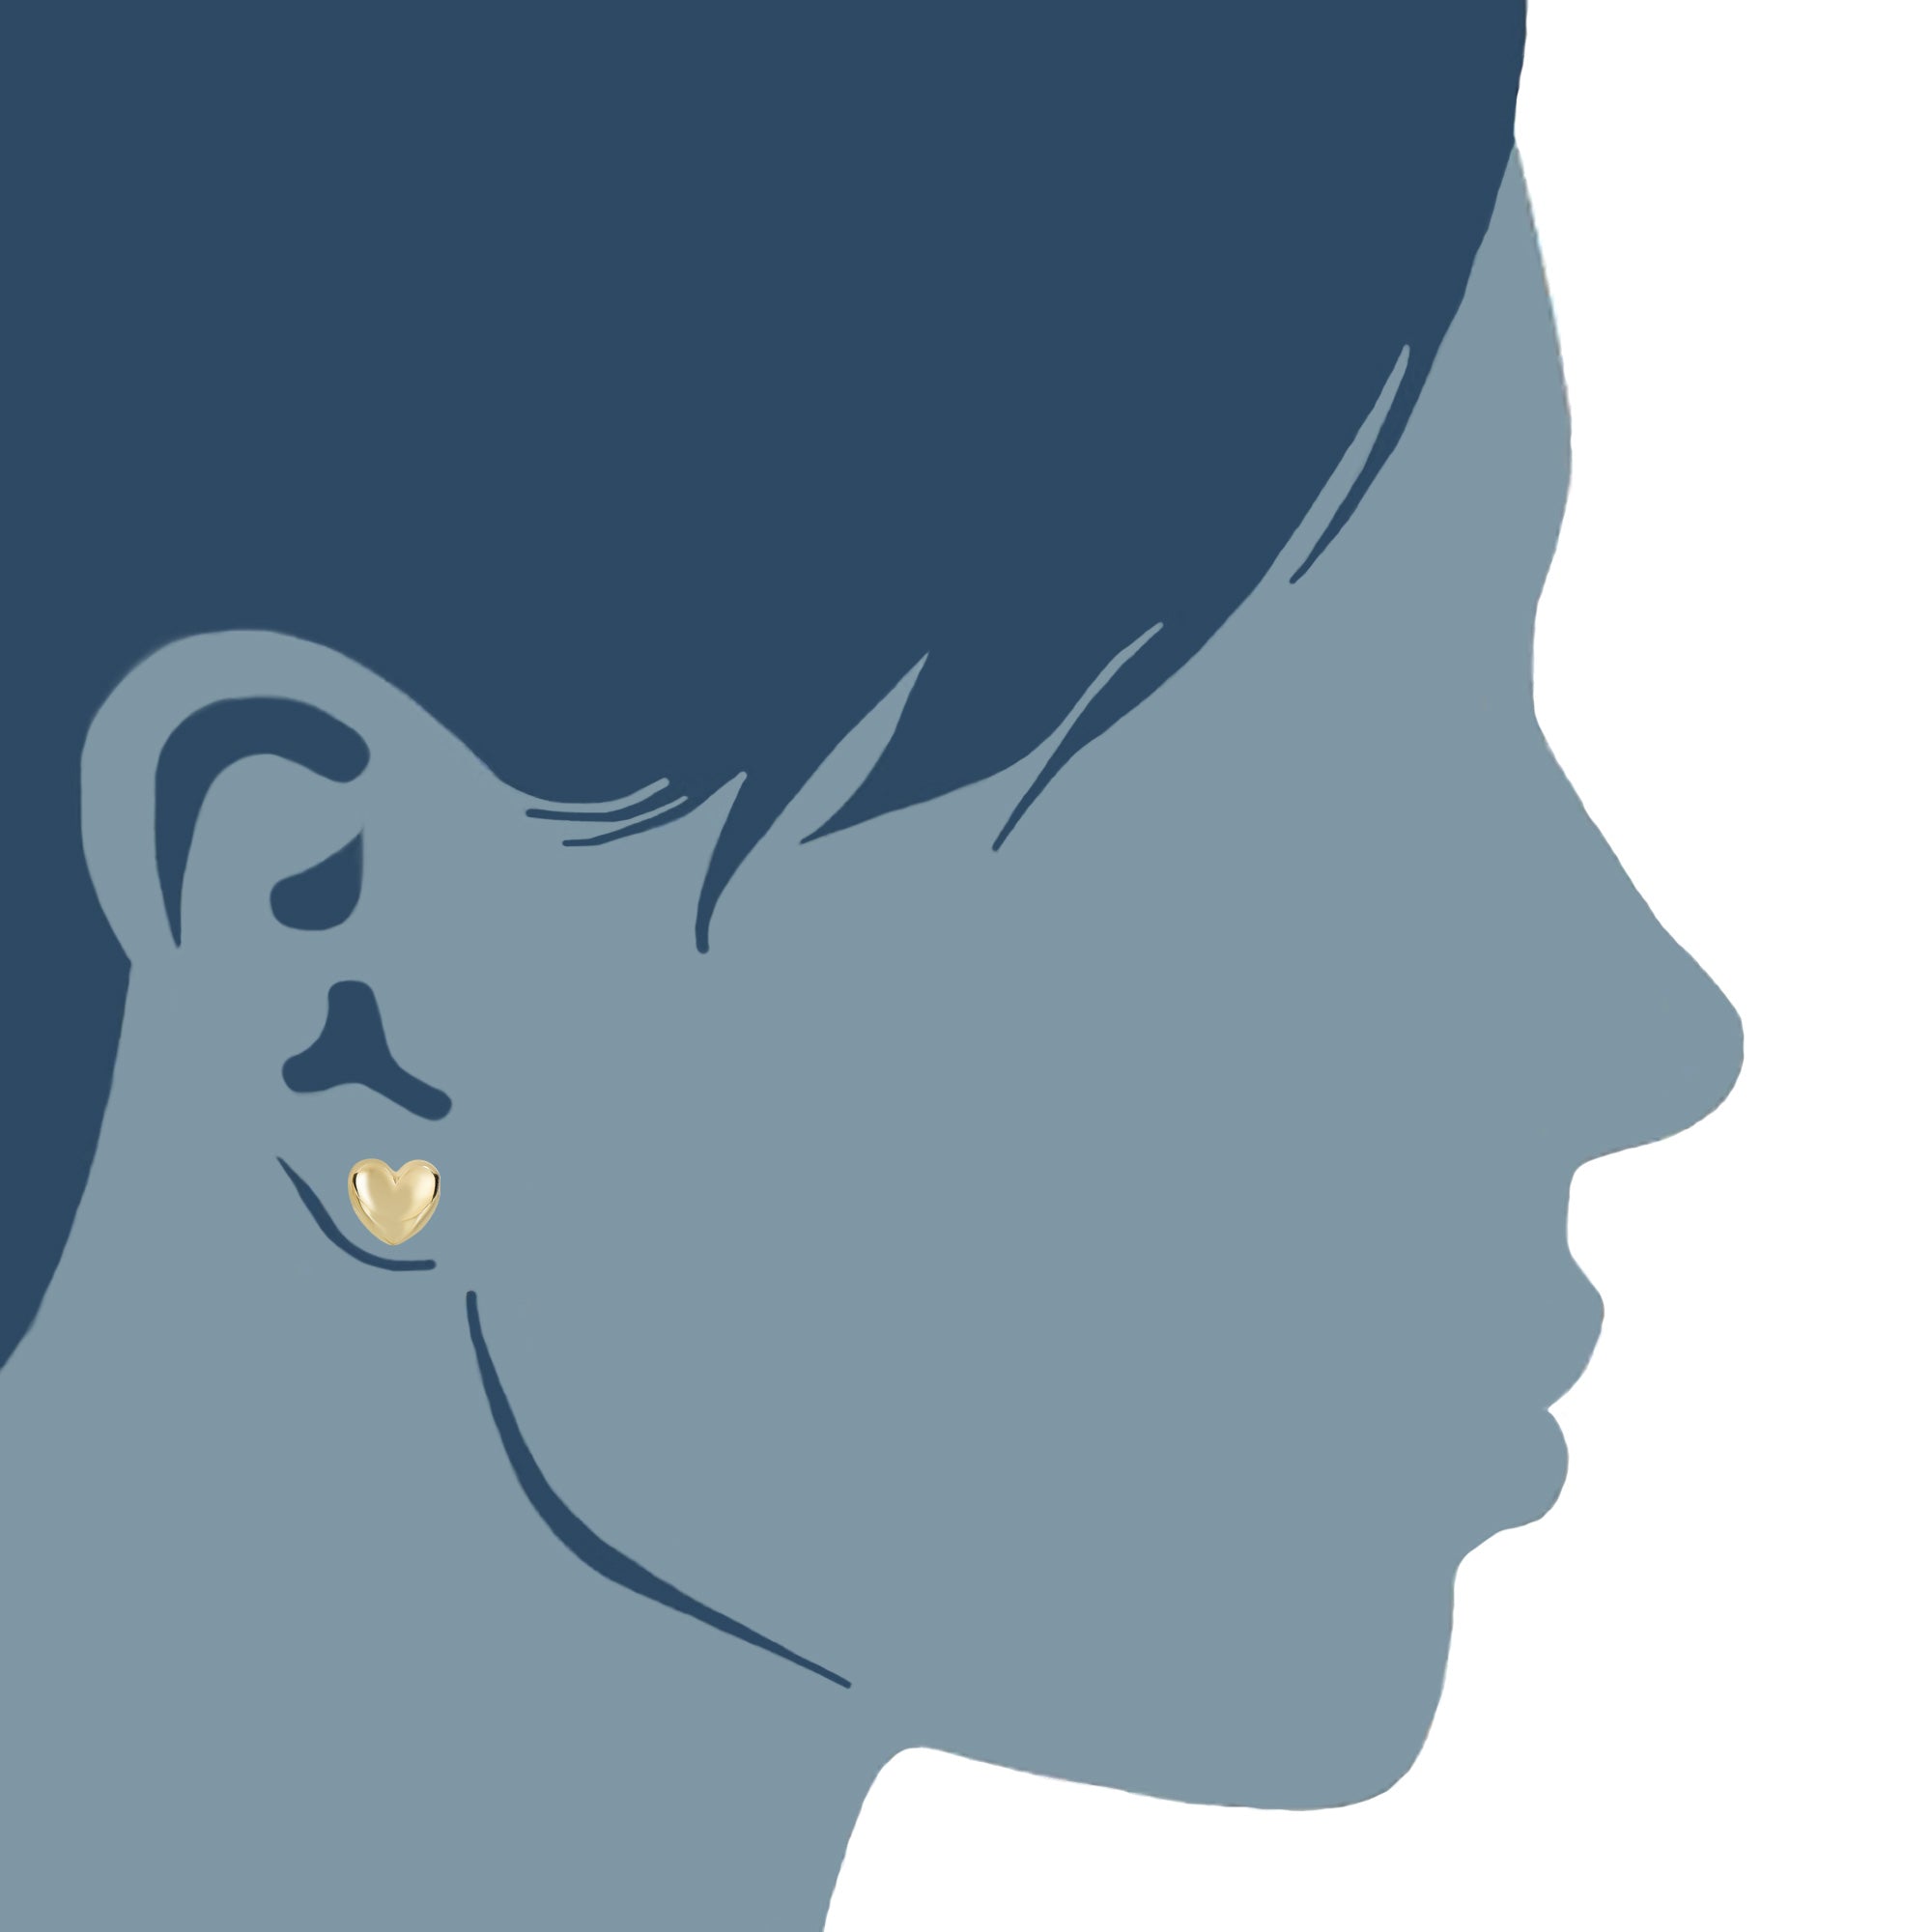 14k Gold Shiny Puff Heart Shape Stud Earrings, 10 x 11mm fine designer jewelry for men and women